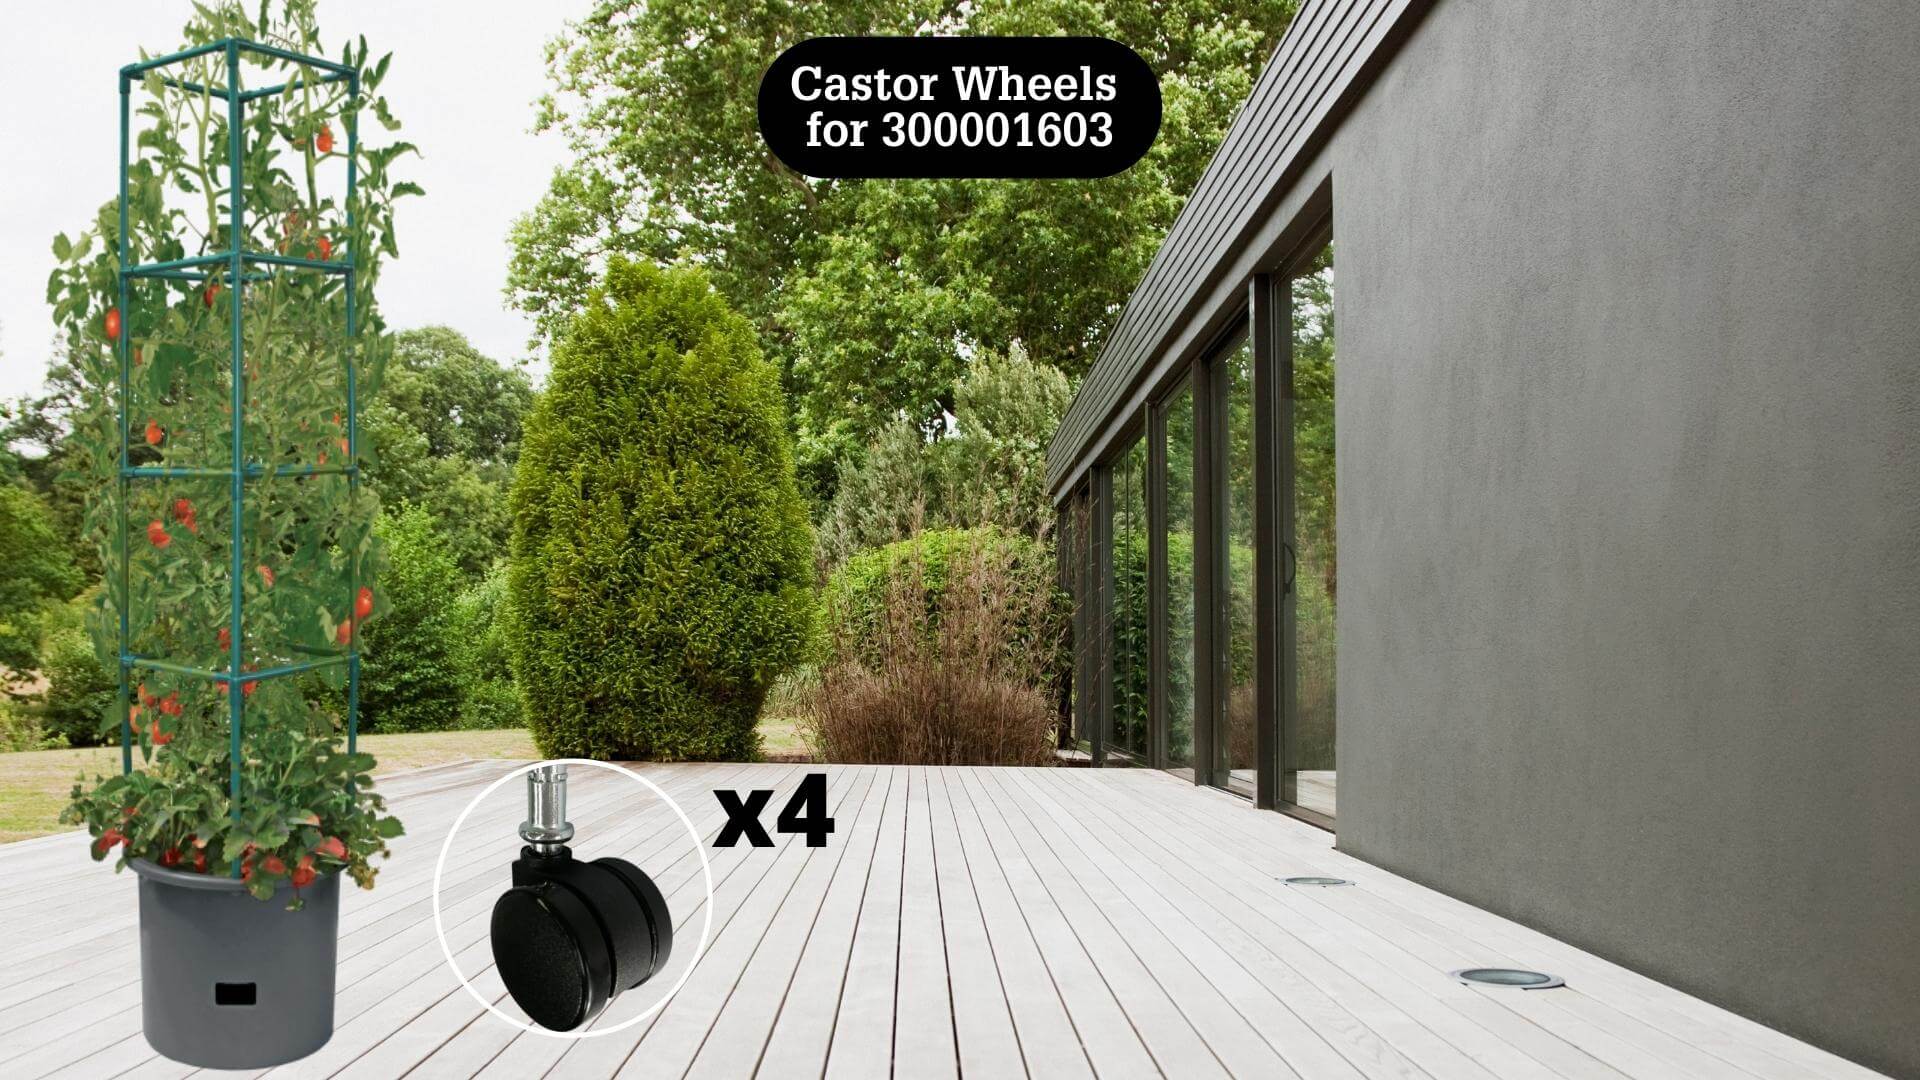 Castor Wheel for Patio Planters